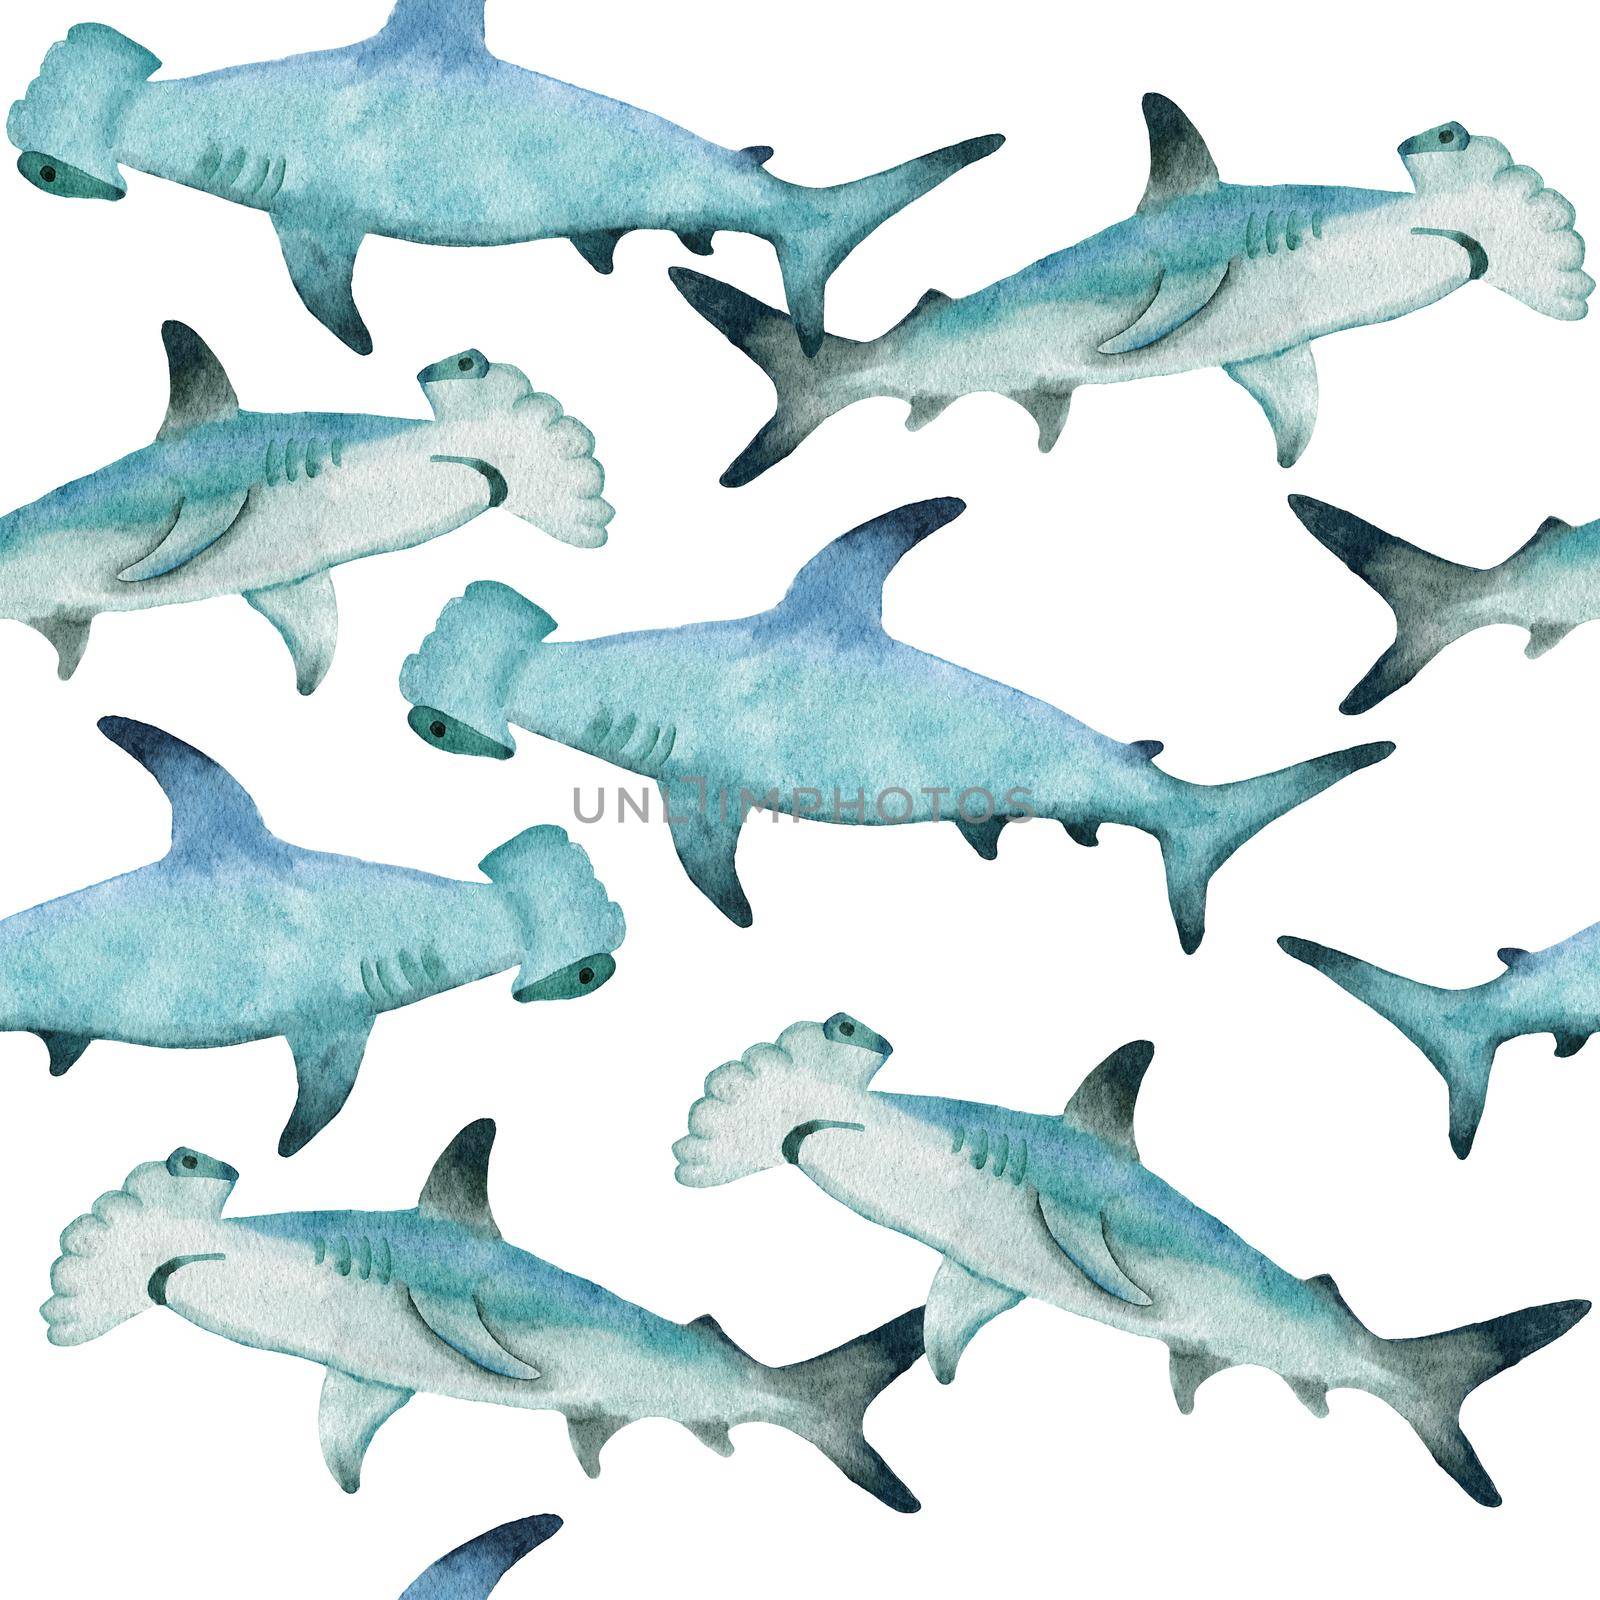 Hand drawn watercolor seamless pattern with hammerhead shark. Sea ocean marine animal, nautical underwater endangered mammal species. Blue gray illustration for fabric nursery decor, under the sea prints